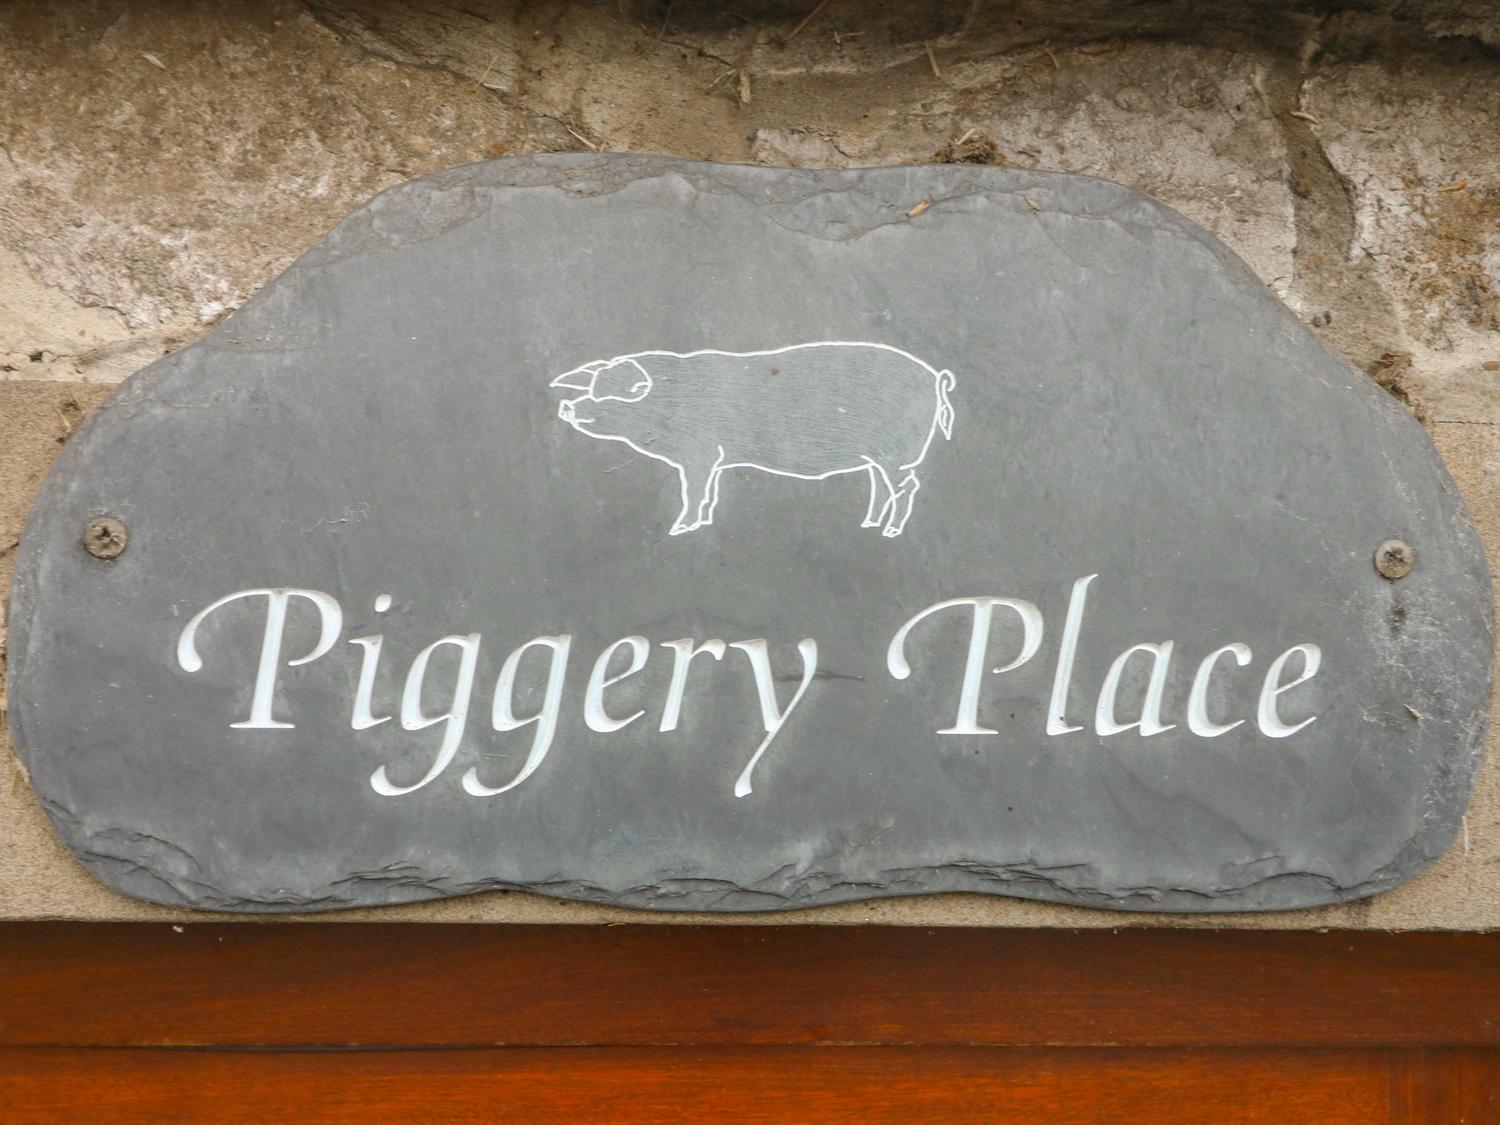 Piggery Place